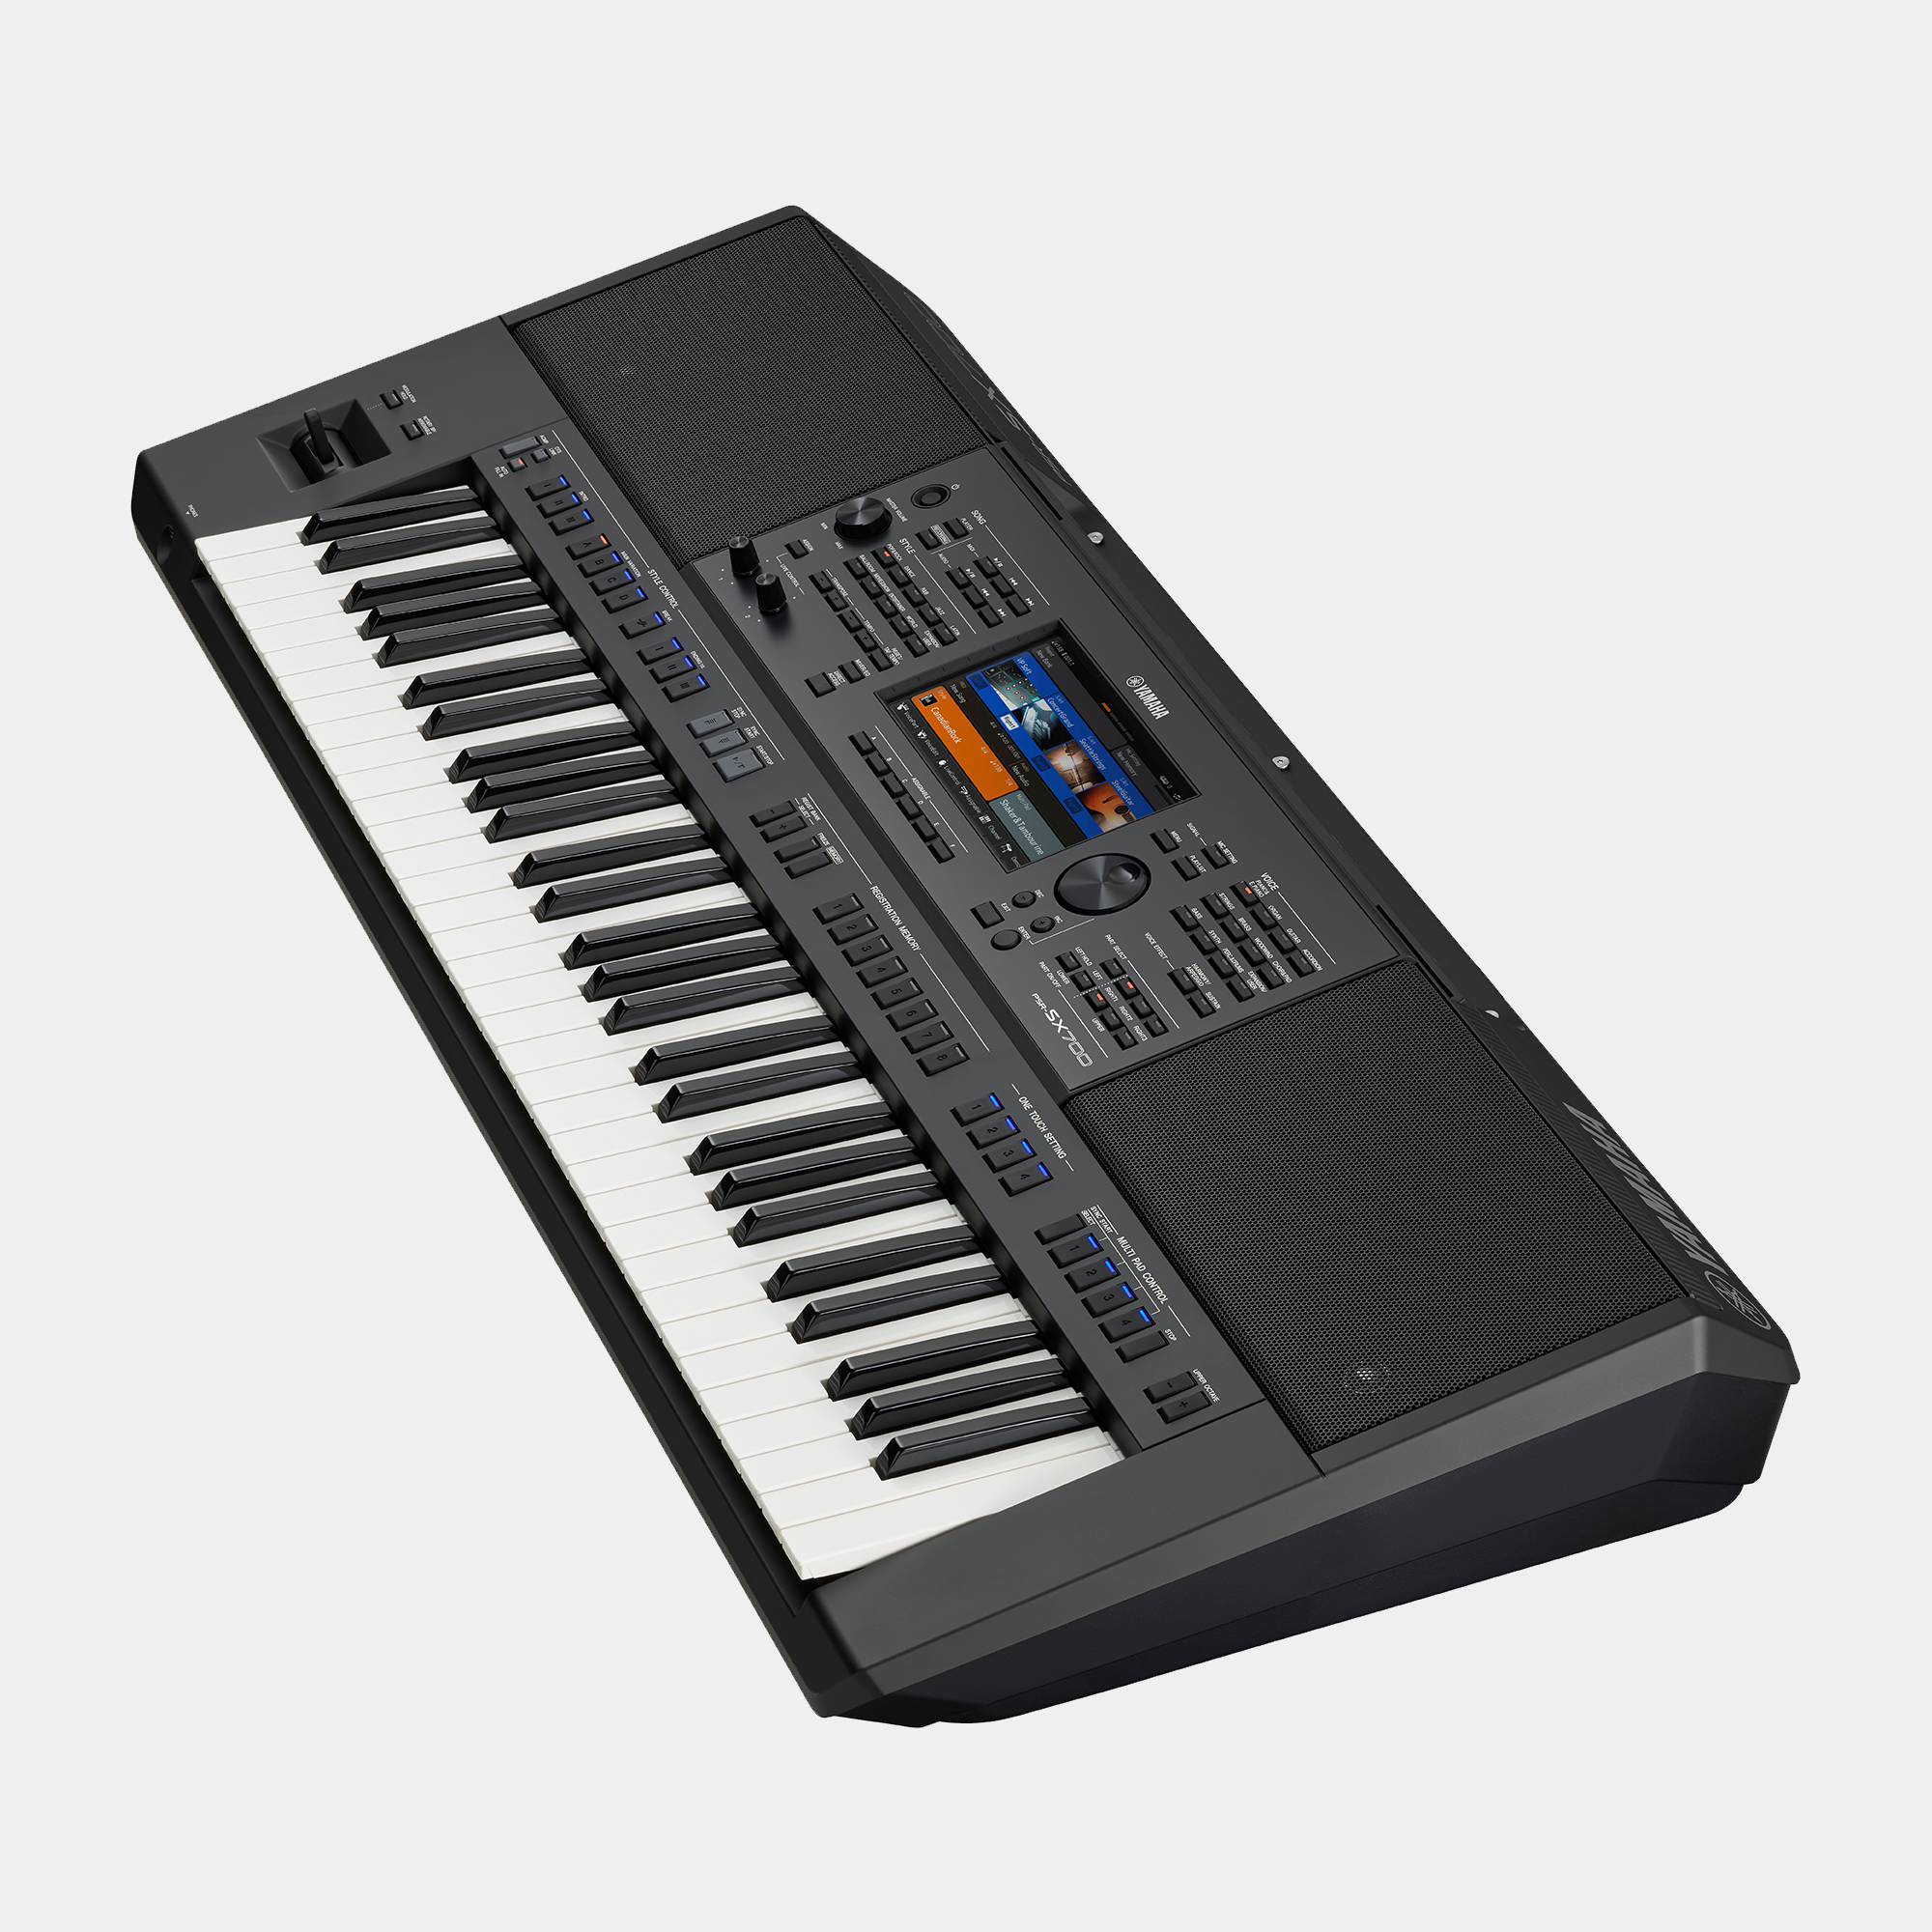 Yamaha PSR-SX700 Arranger Workstation keyboard